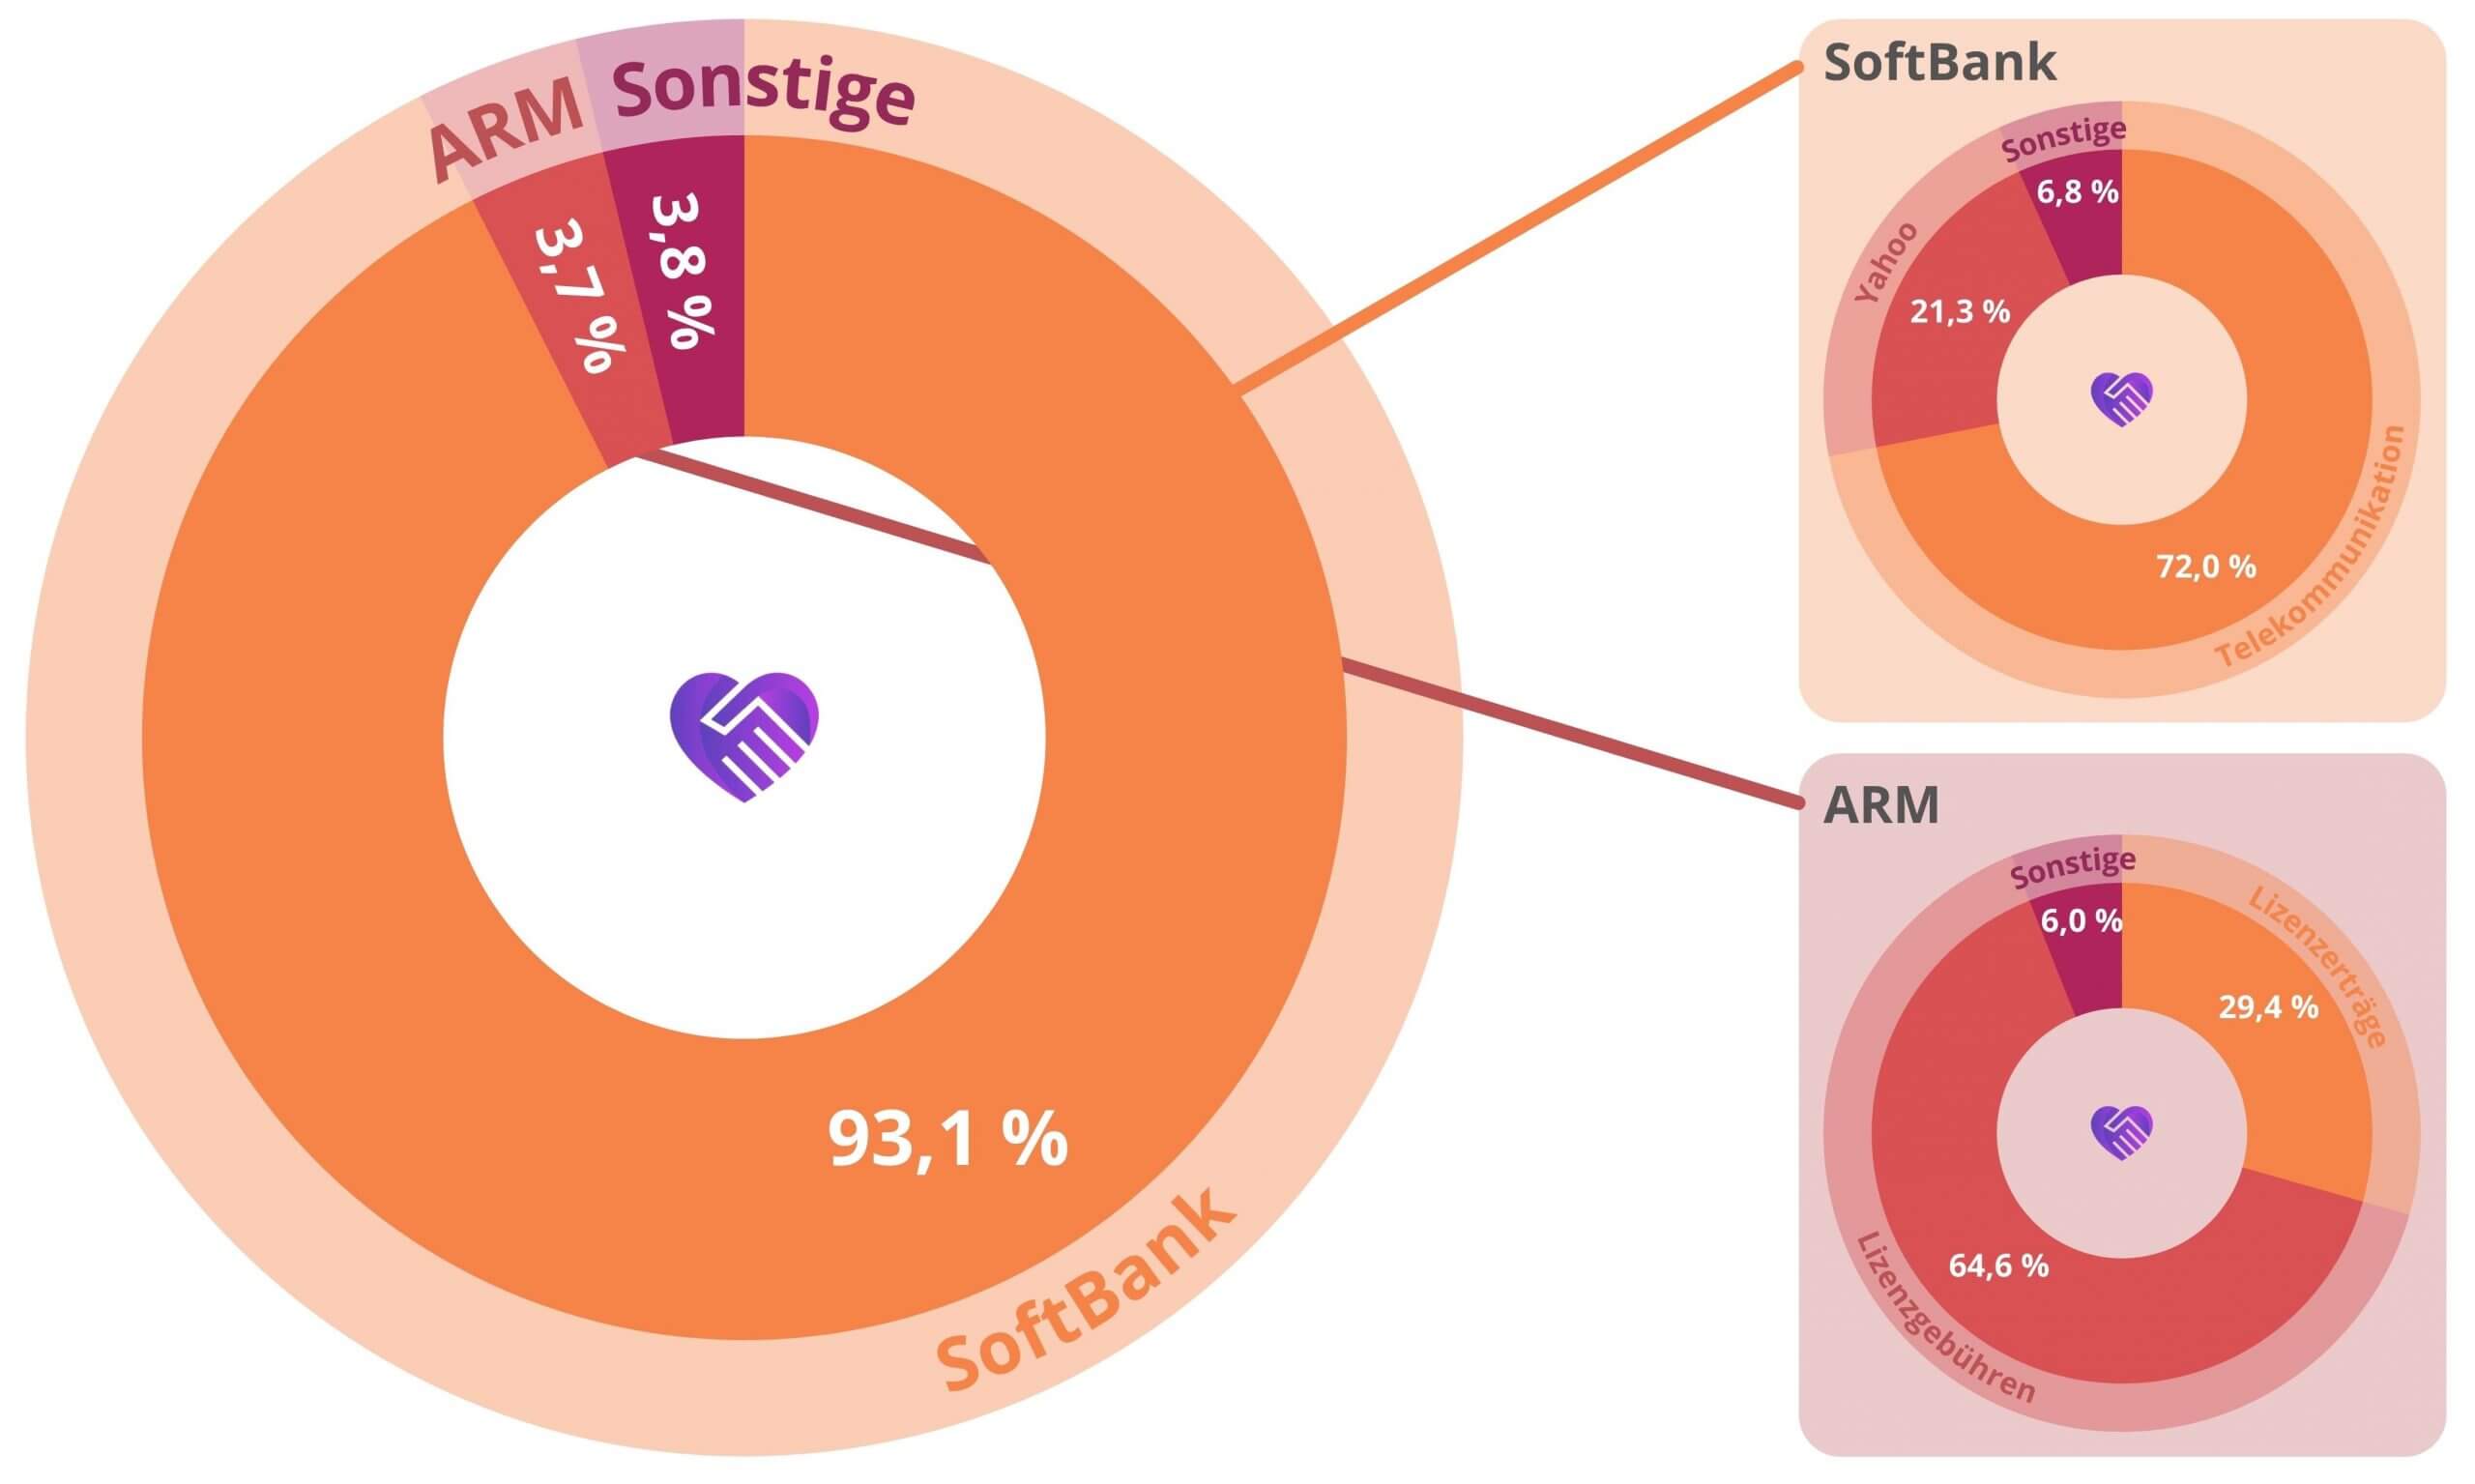 SoftBank Aktie Analyse - Überrendite mit Risikokapitalgeber